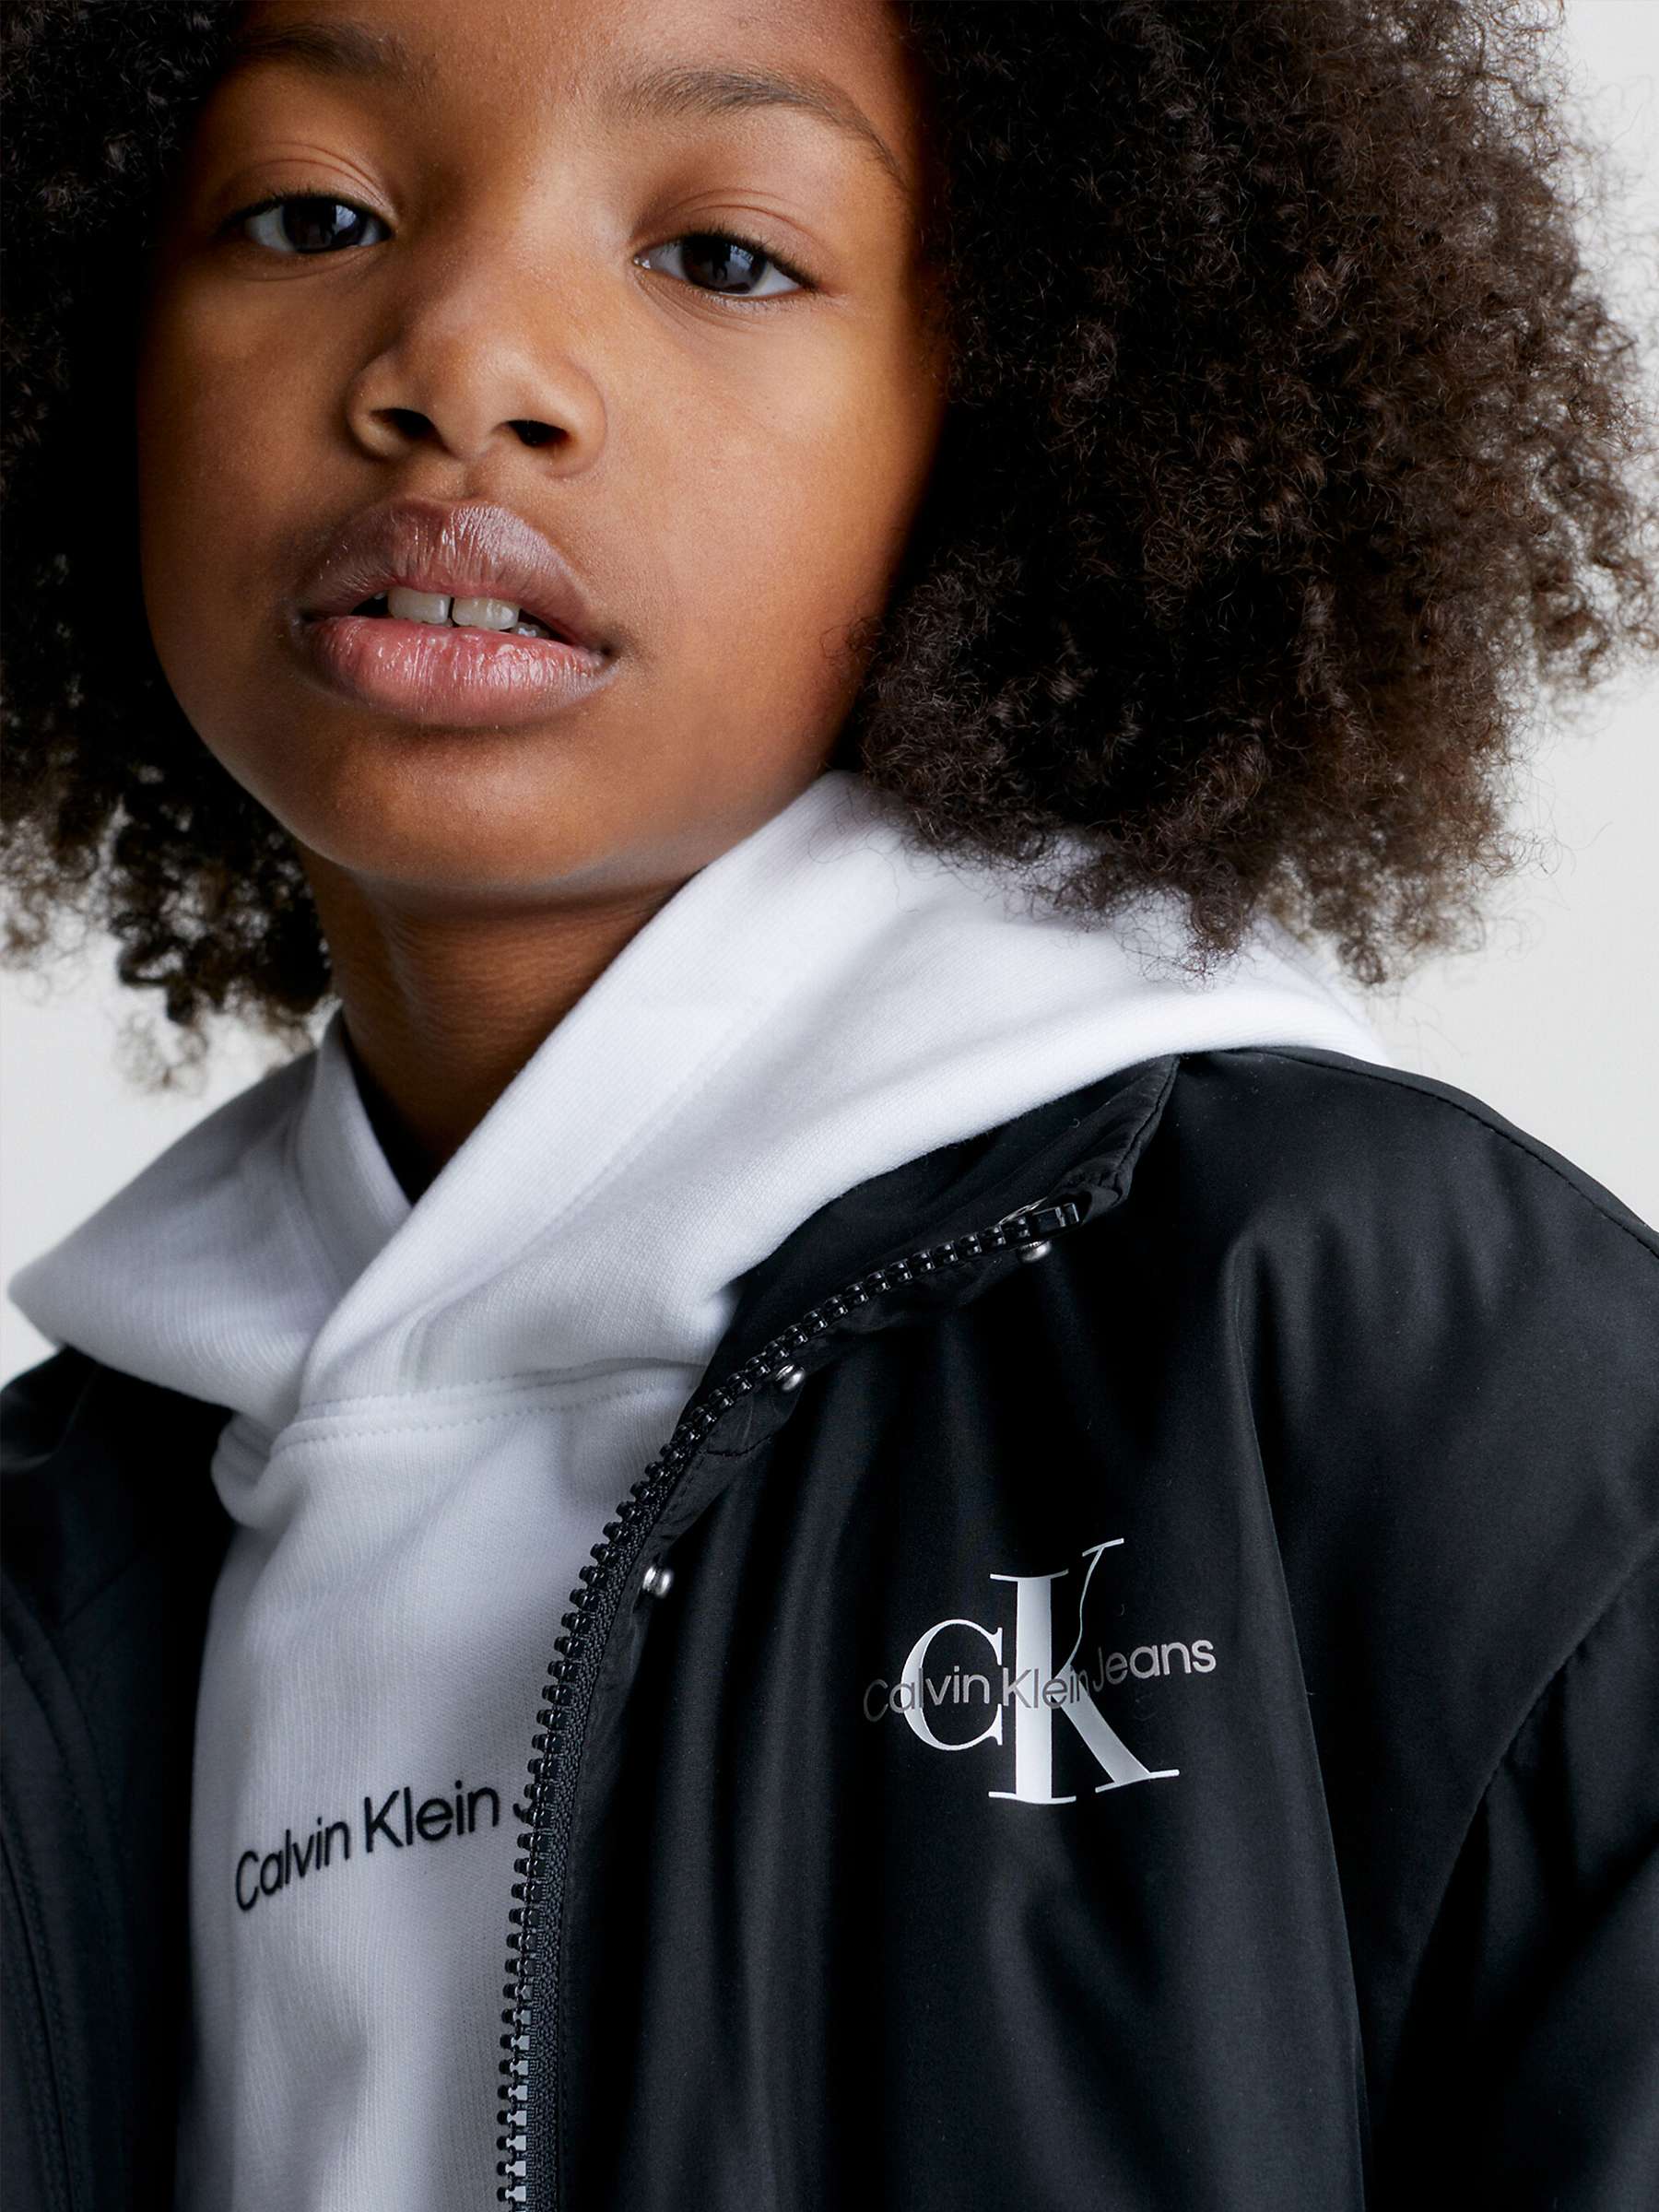 Buy Calvin Klein Jeans Kids' 2-in-1 Padded Jacket, CK Black Online at johnlewis.com